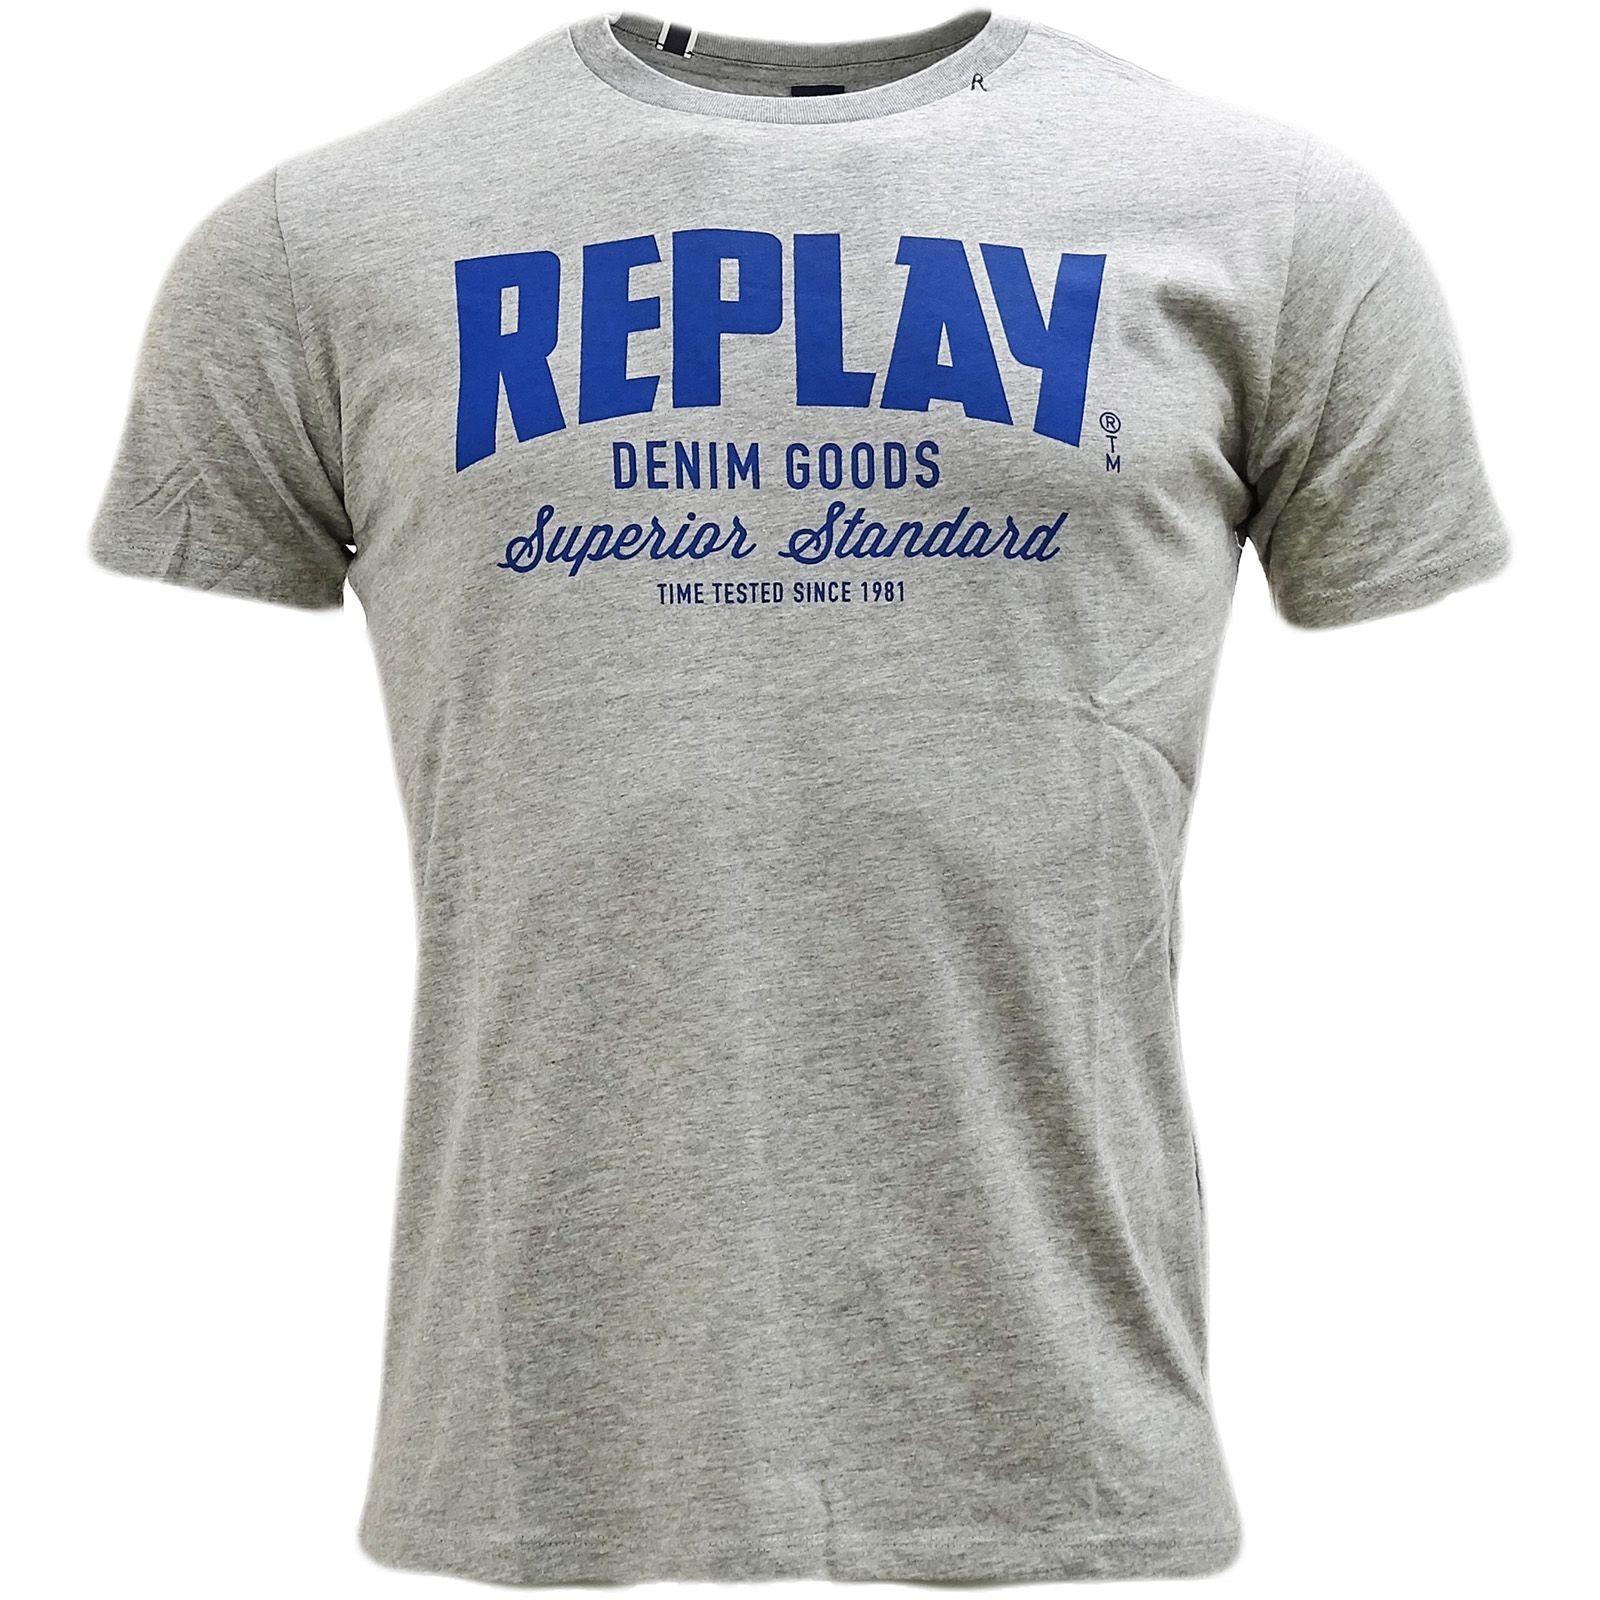 Replay Logo - Replay With 'Replay Logo' T Shirt